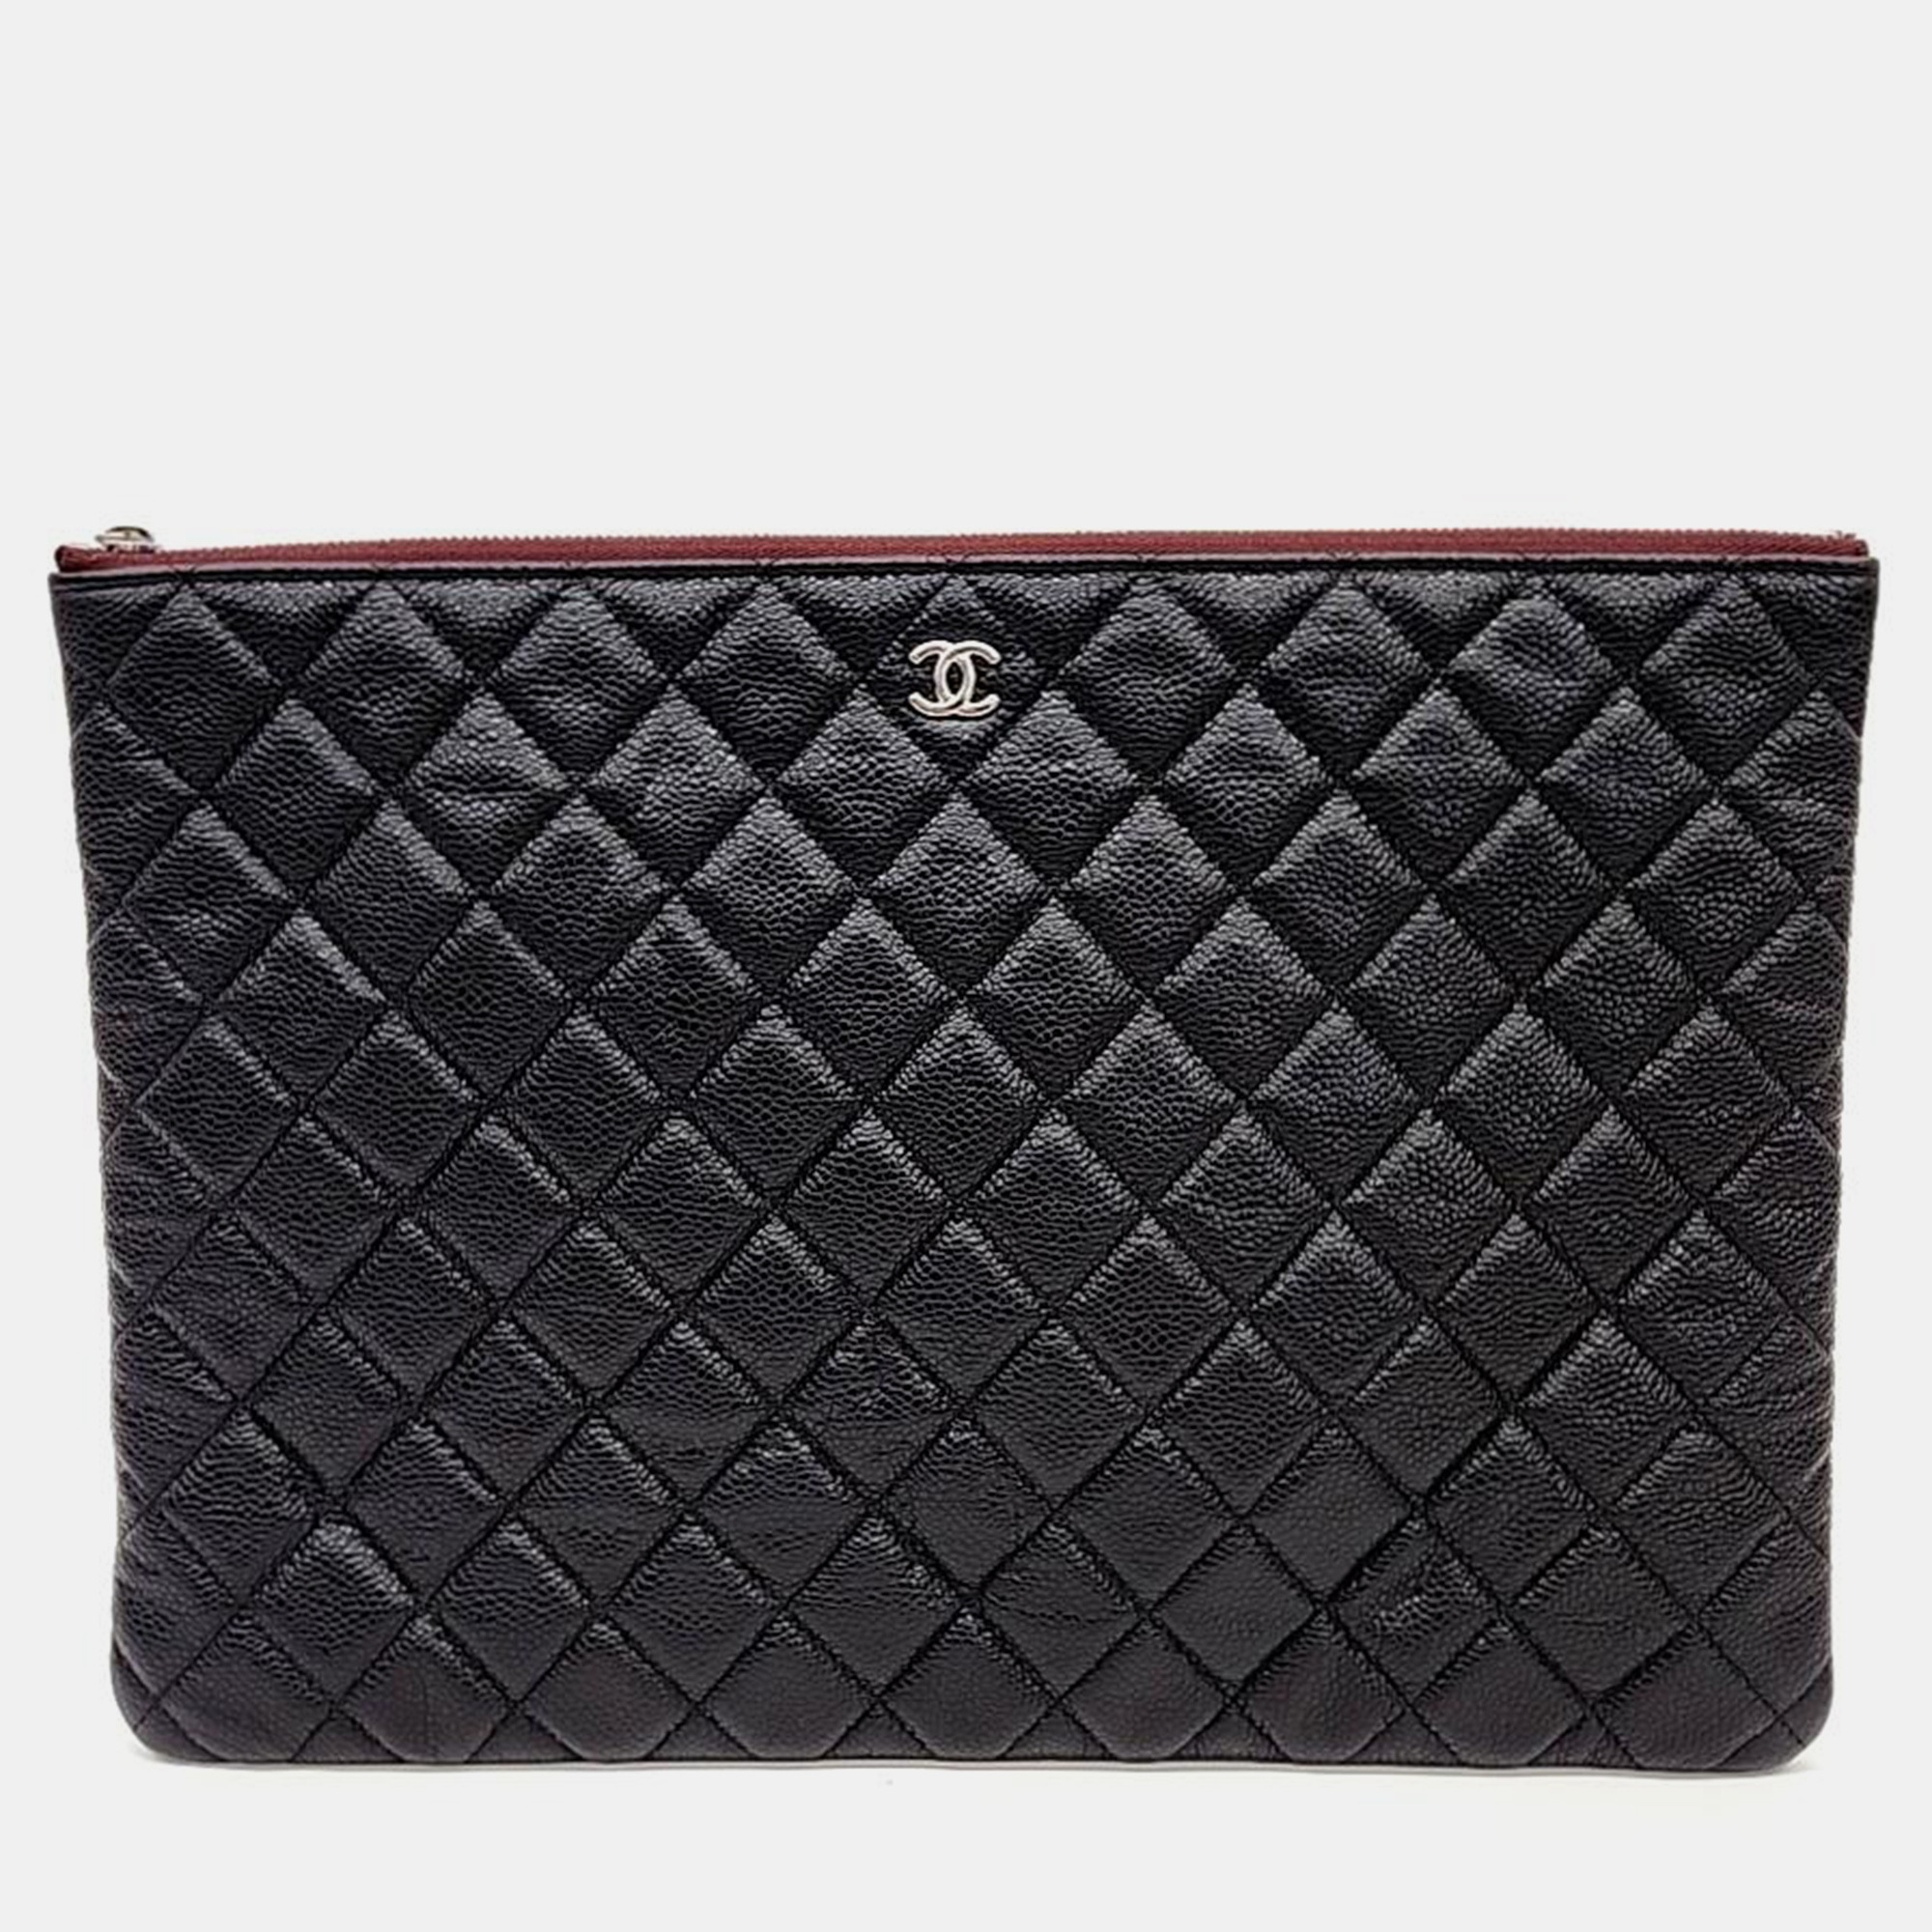 Chanel black caviar leather large clutch bag